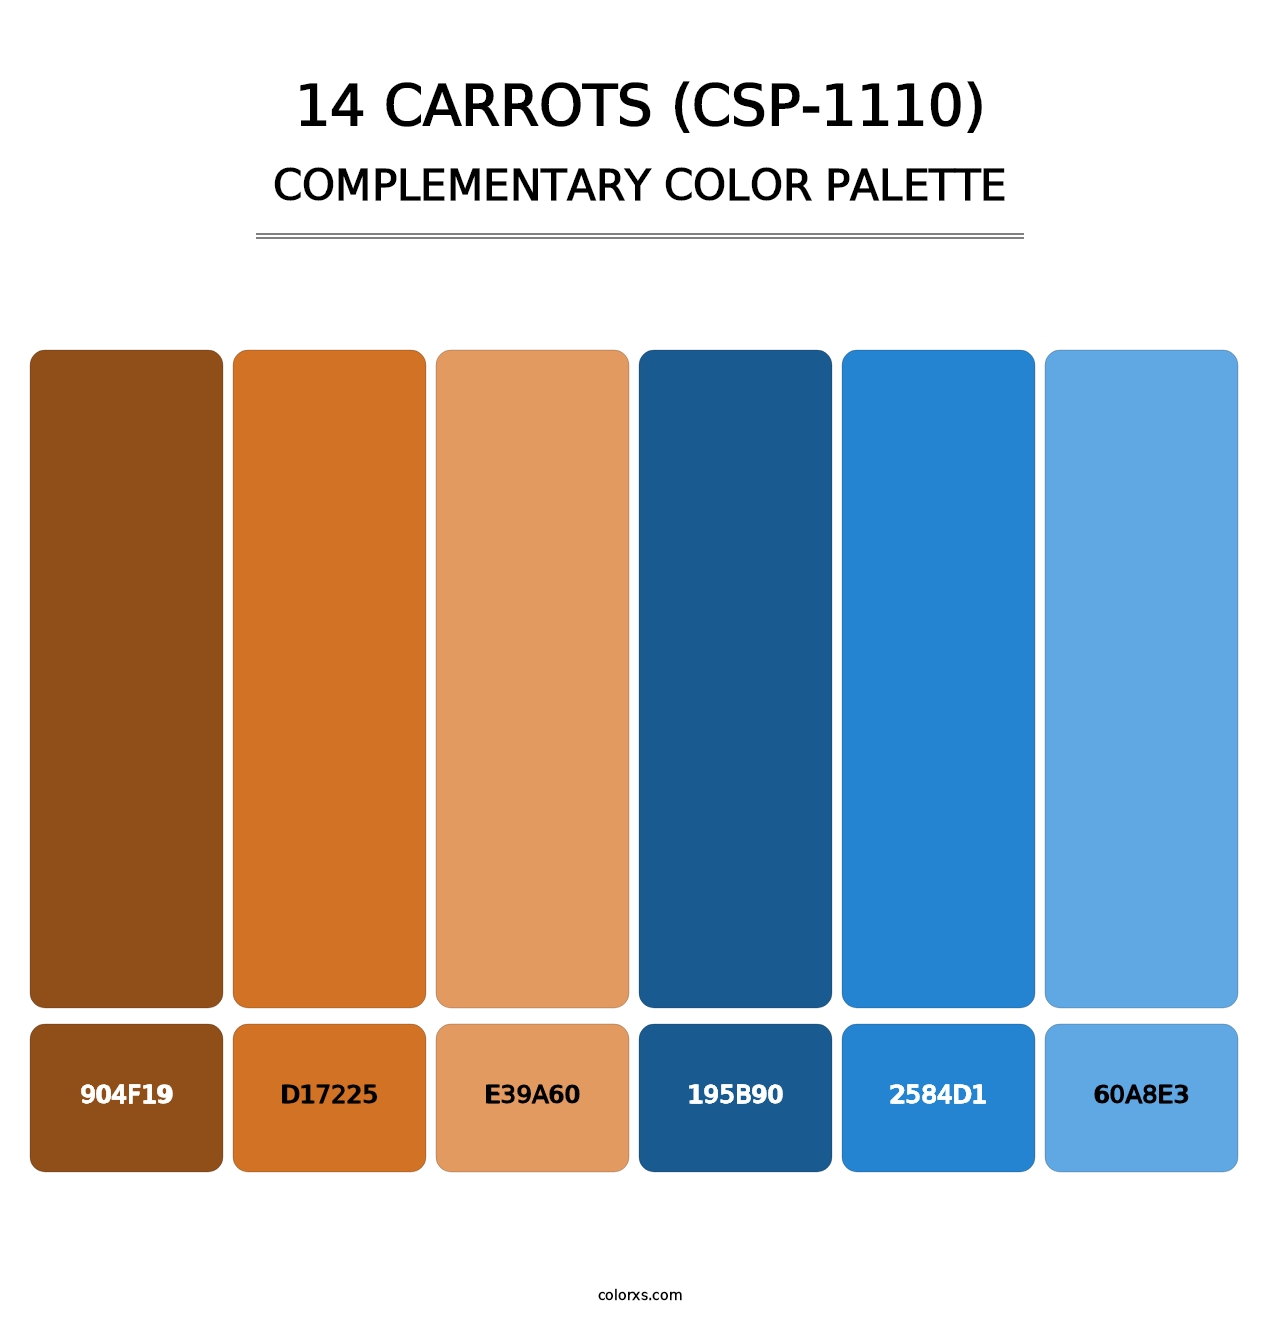 14 Carrots (CSP-1110) - Complementary Color Palette